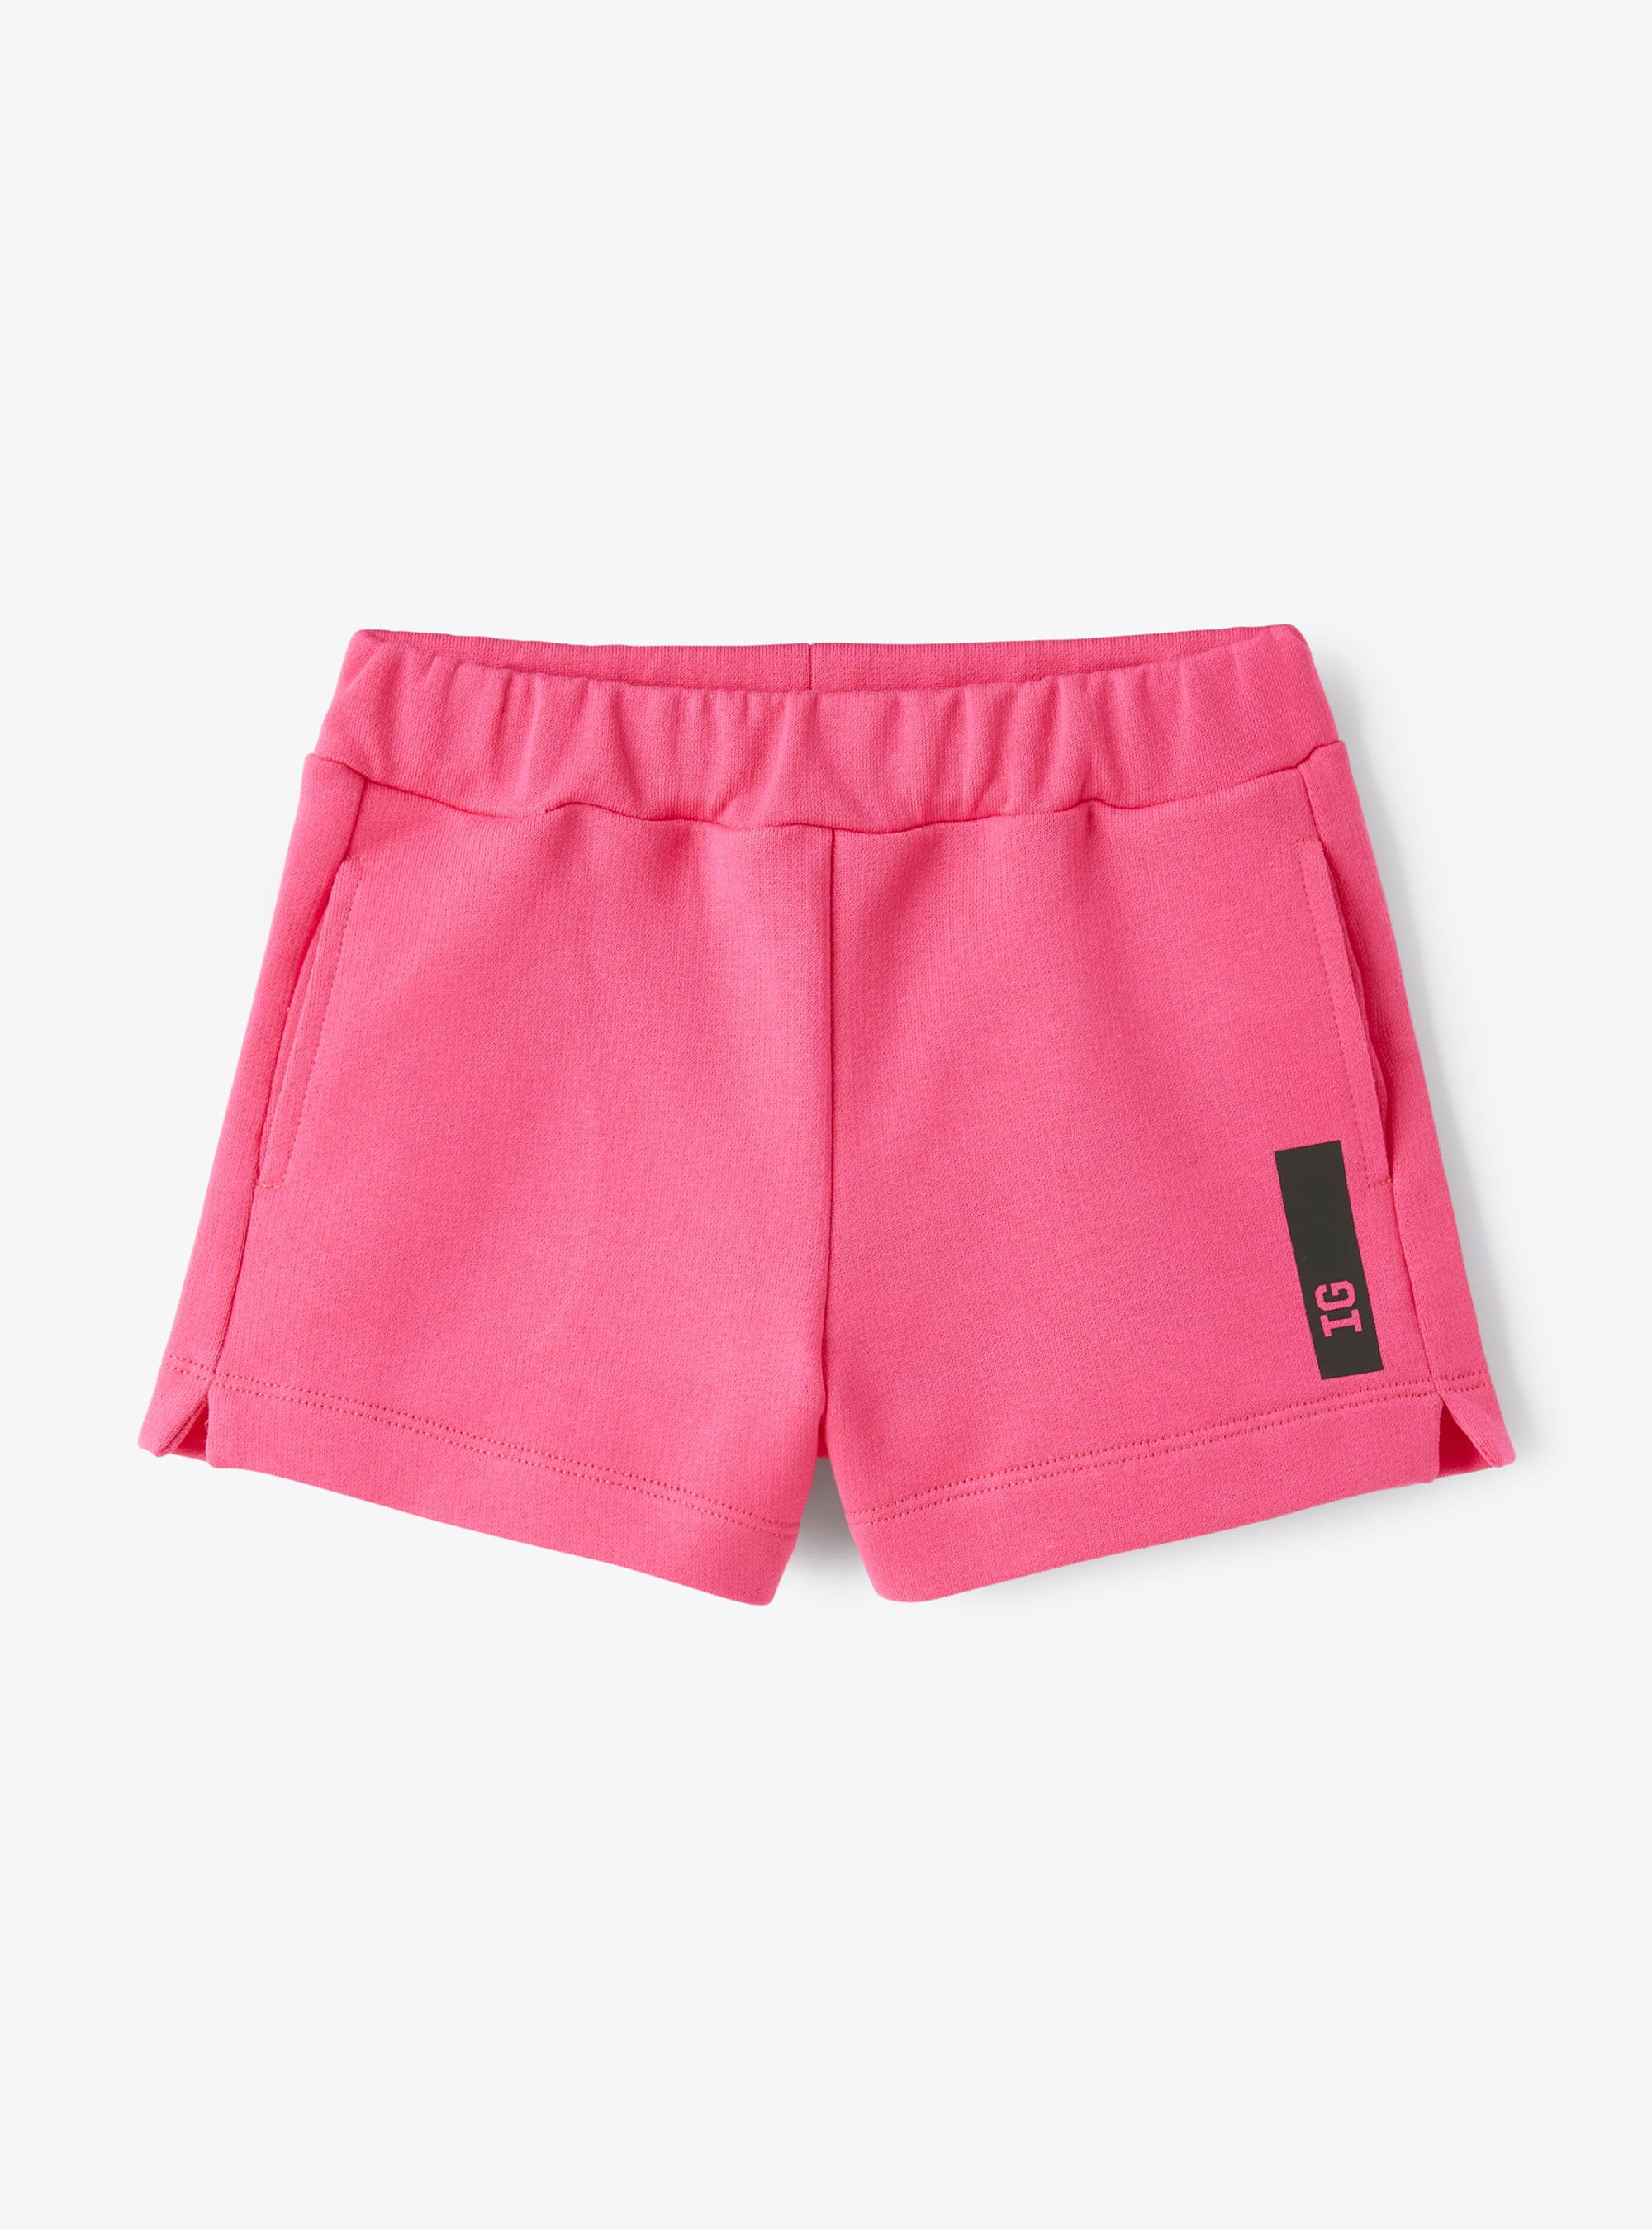 Shorts in fuchsia-pink fleece - Trousers - Il Gufo